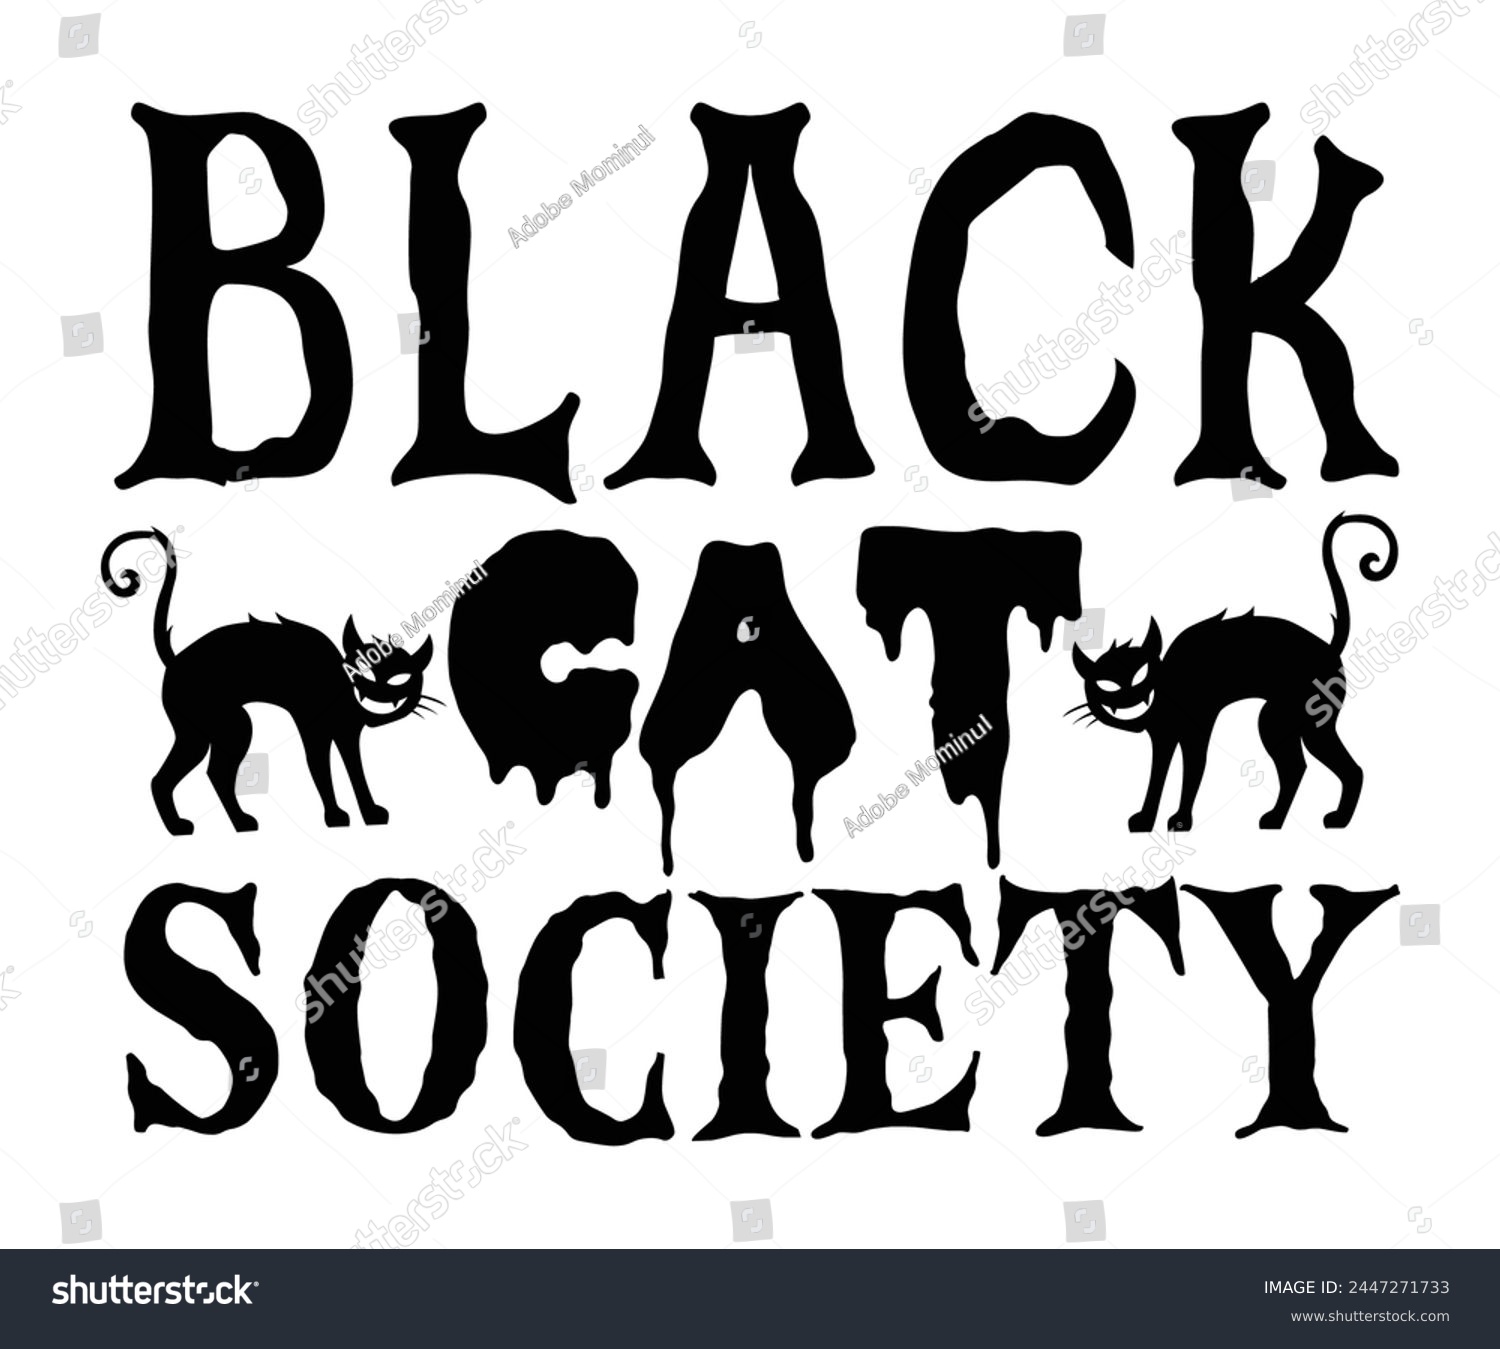 SVG of Black Cat Society,Halloween Svg,Typography,Halloween Quotes,Witches Svg,Halloween Party,Halloween Costume,Halloween Gift,Funny Halloween,Spooky Svg,Funny T shirt,Ghost Svg,Cut file svg